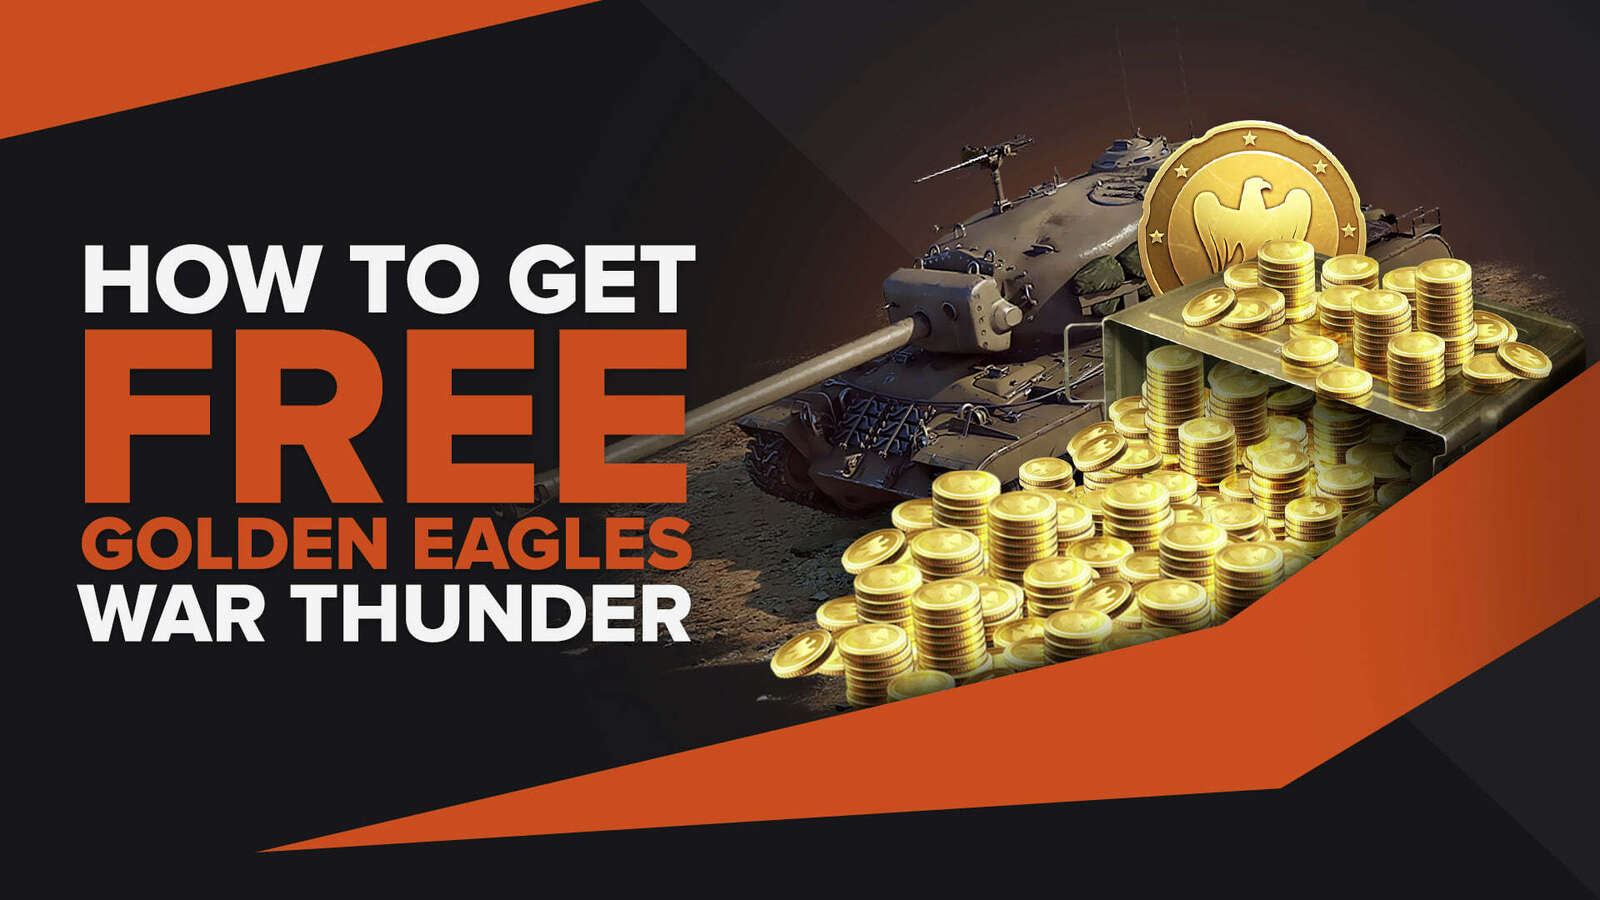 War Thunder Golden Eagles: How To Get Them For Free [Legit Methods]